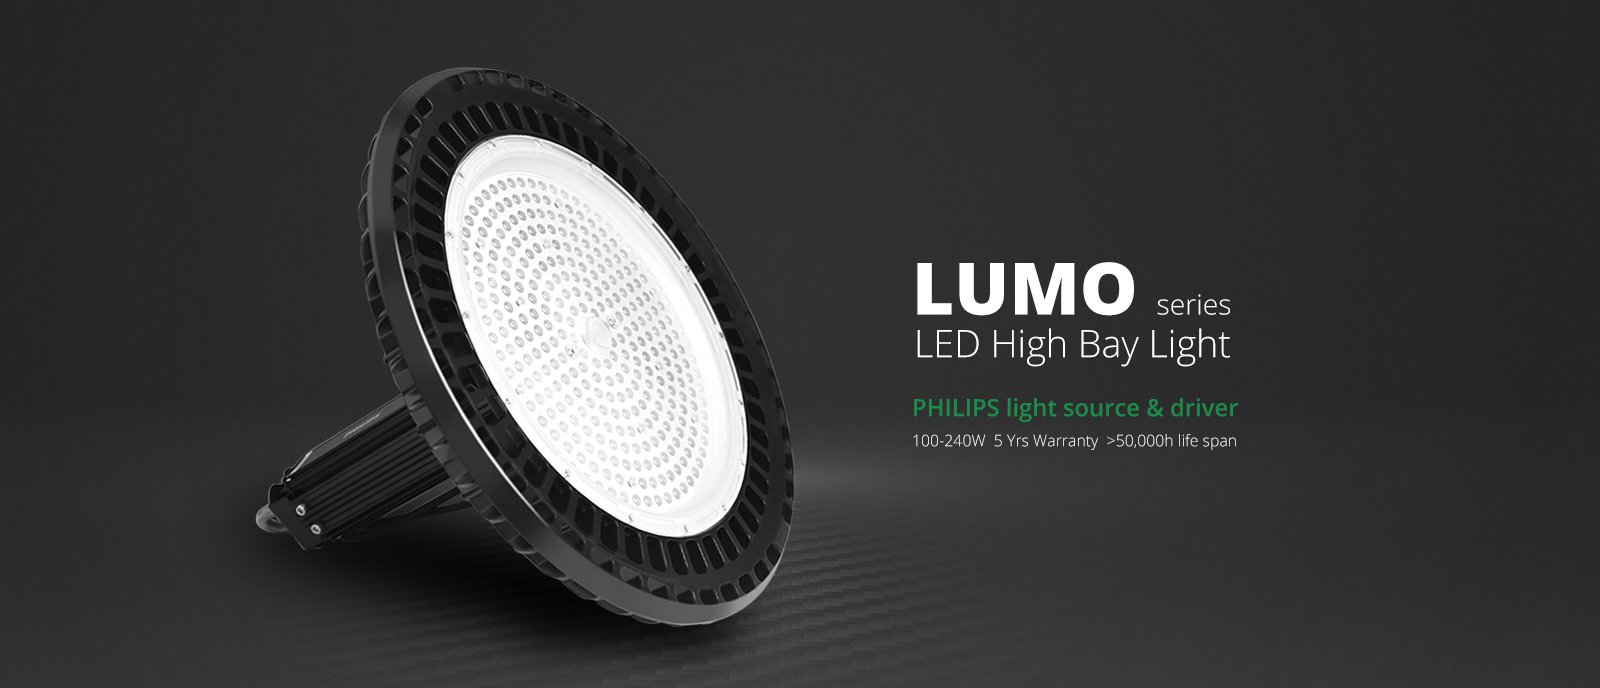 LUMO series of LED High Bay Light